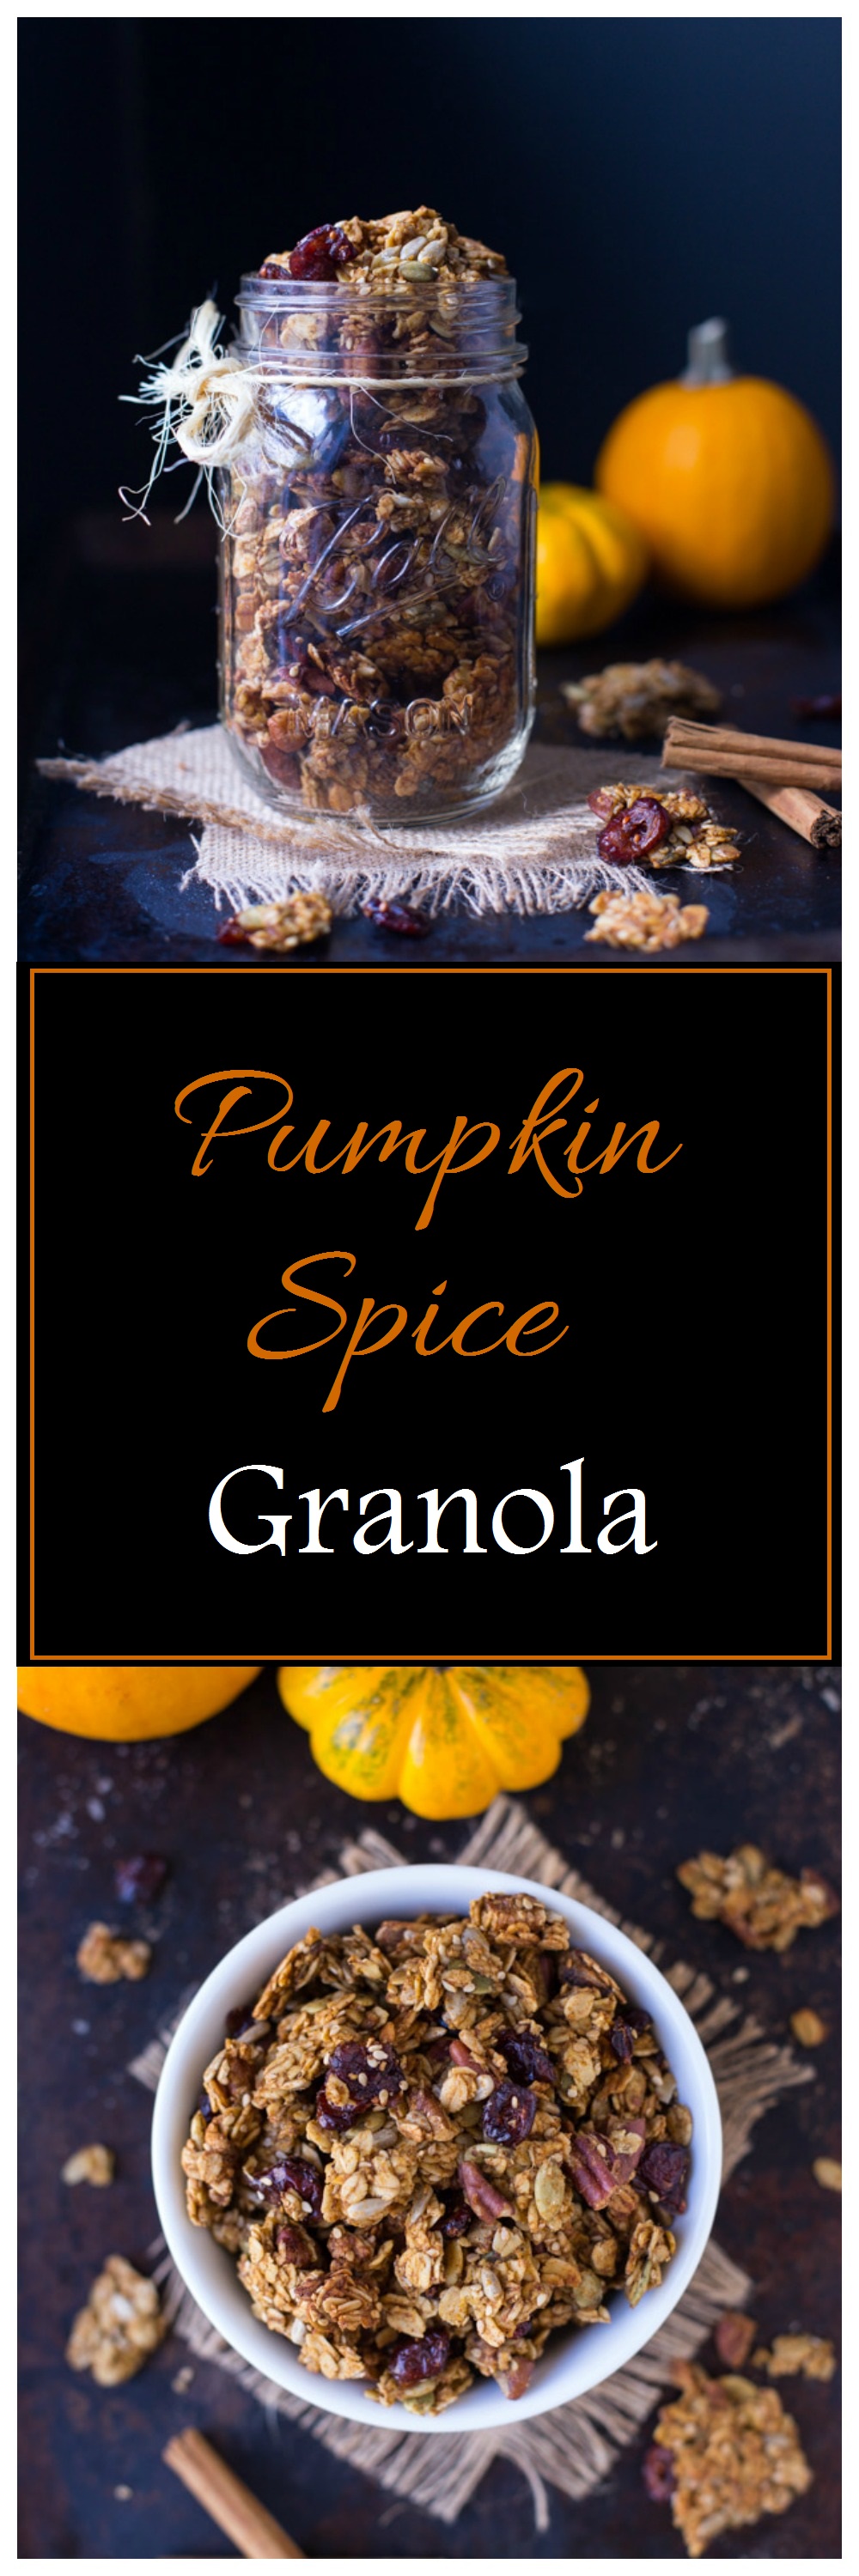 Pumpkin Spice Granola 001